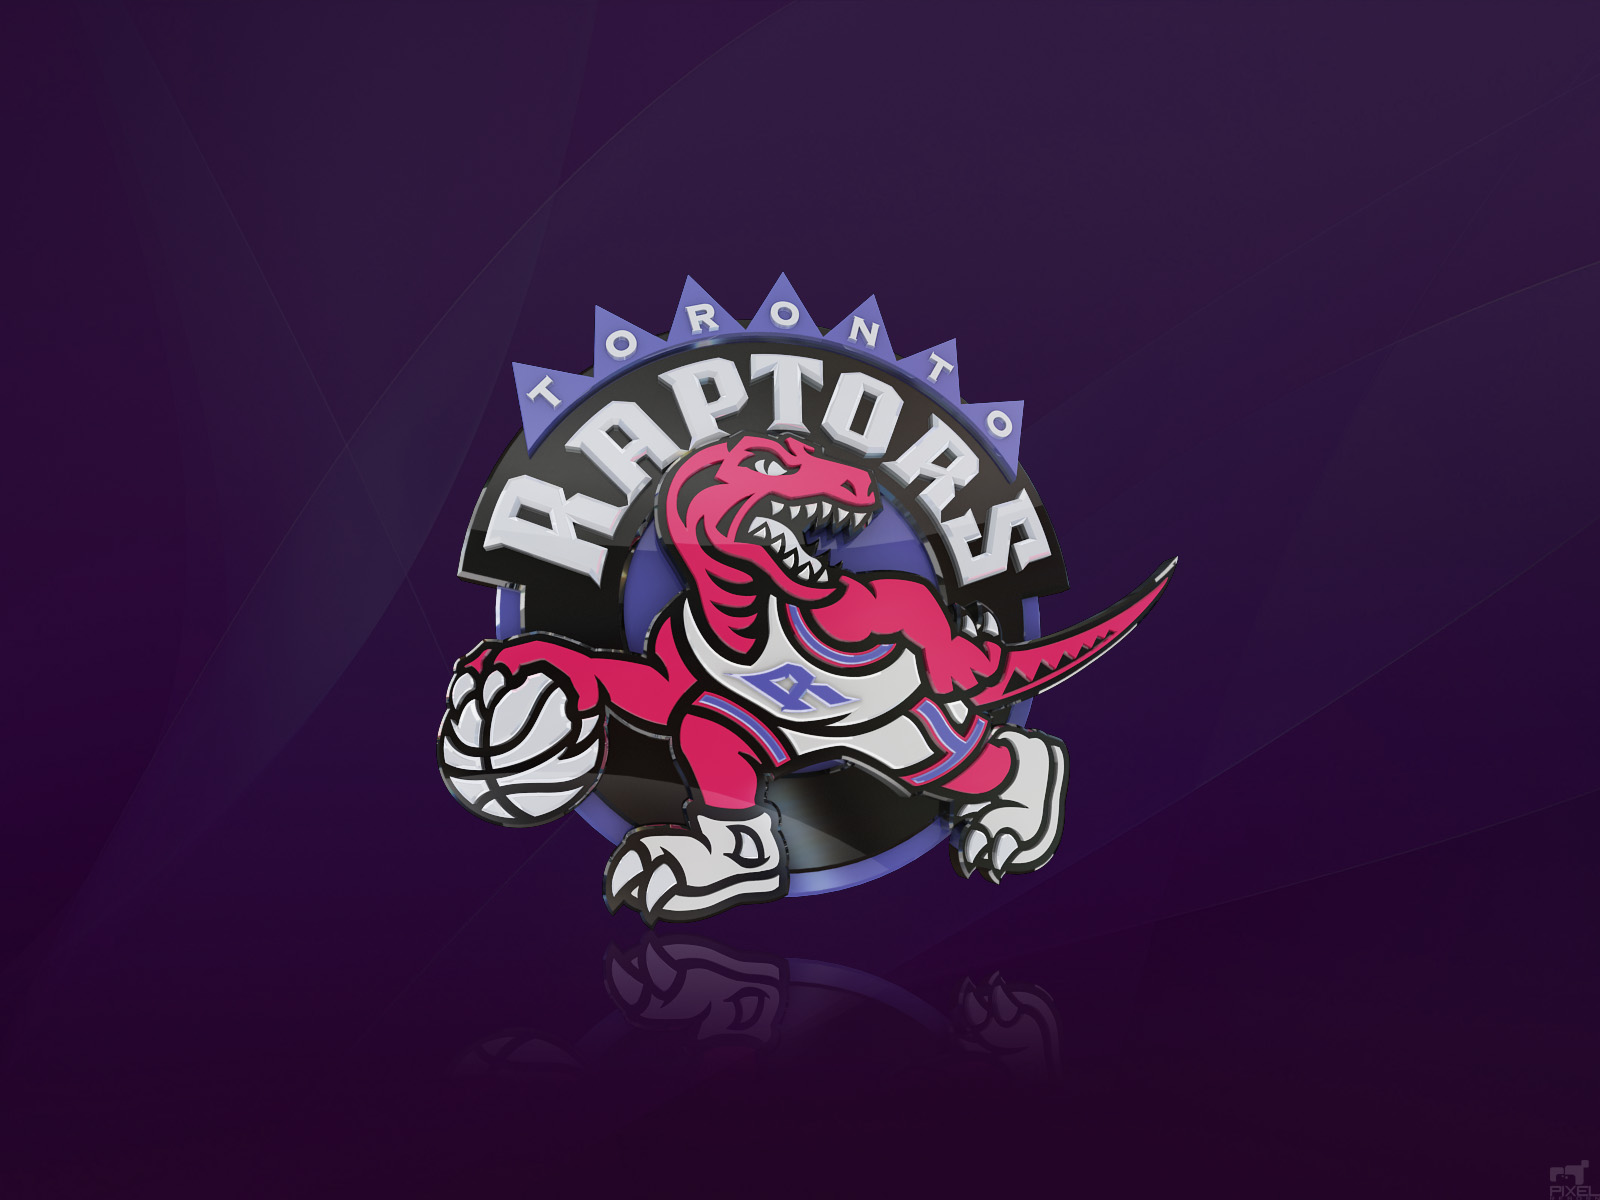 Toronto Raptors news